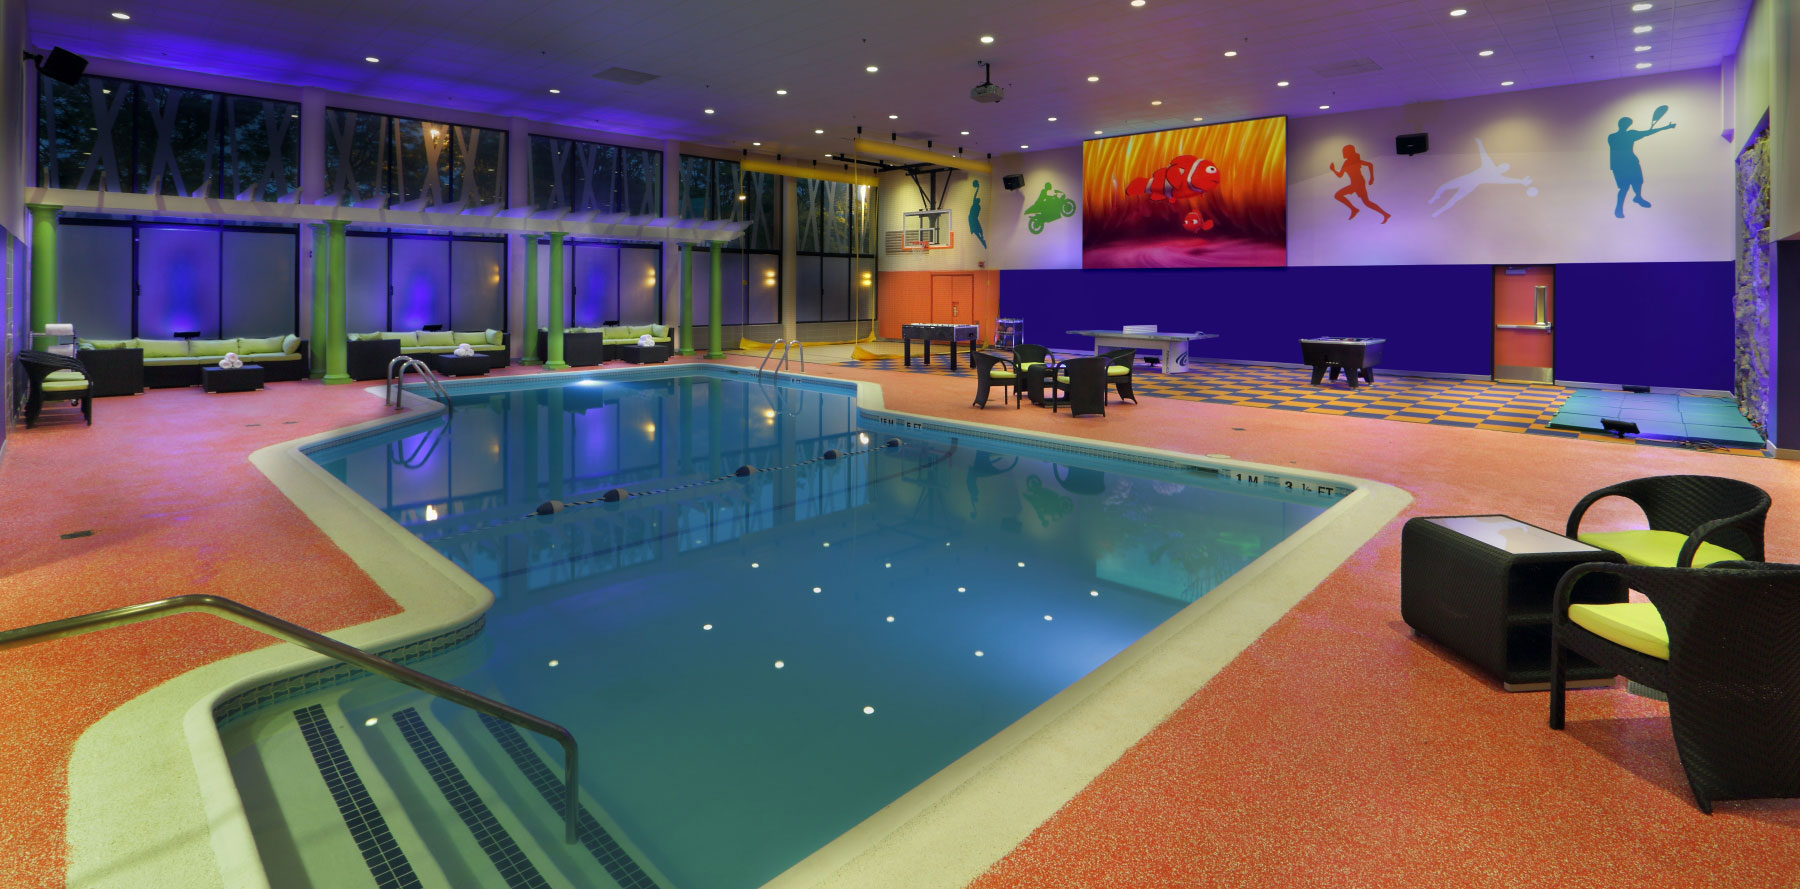 Holiday Inn Bunkerhill Boston indoor pool